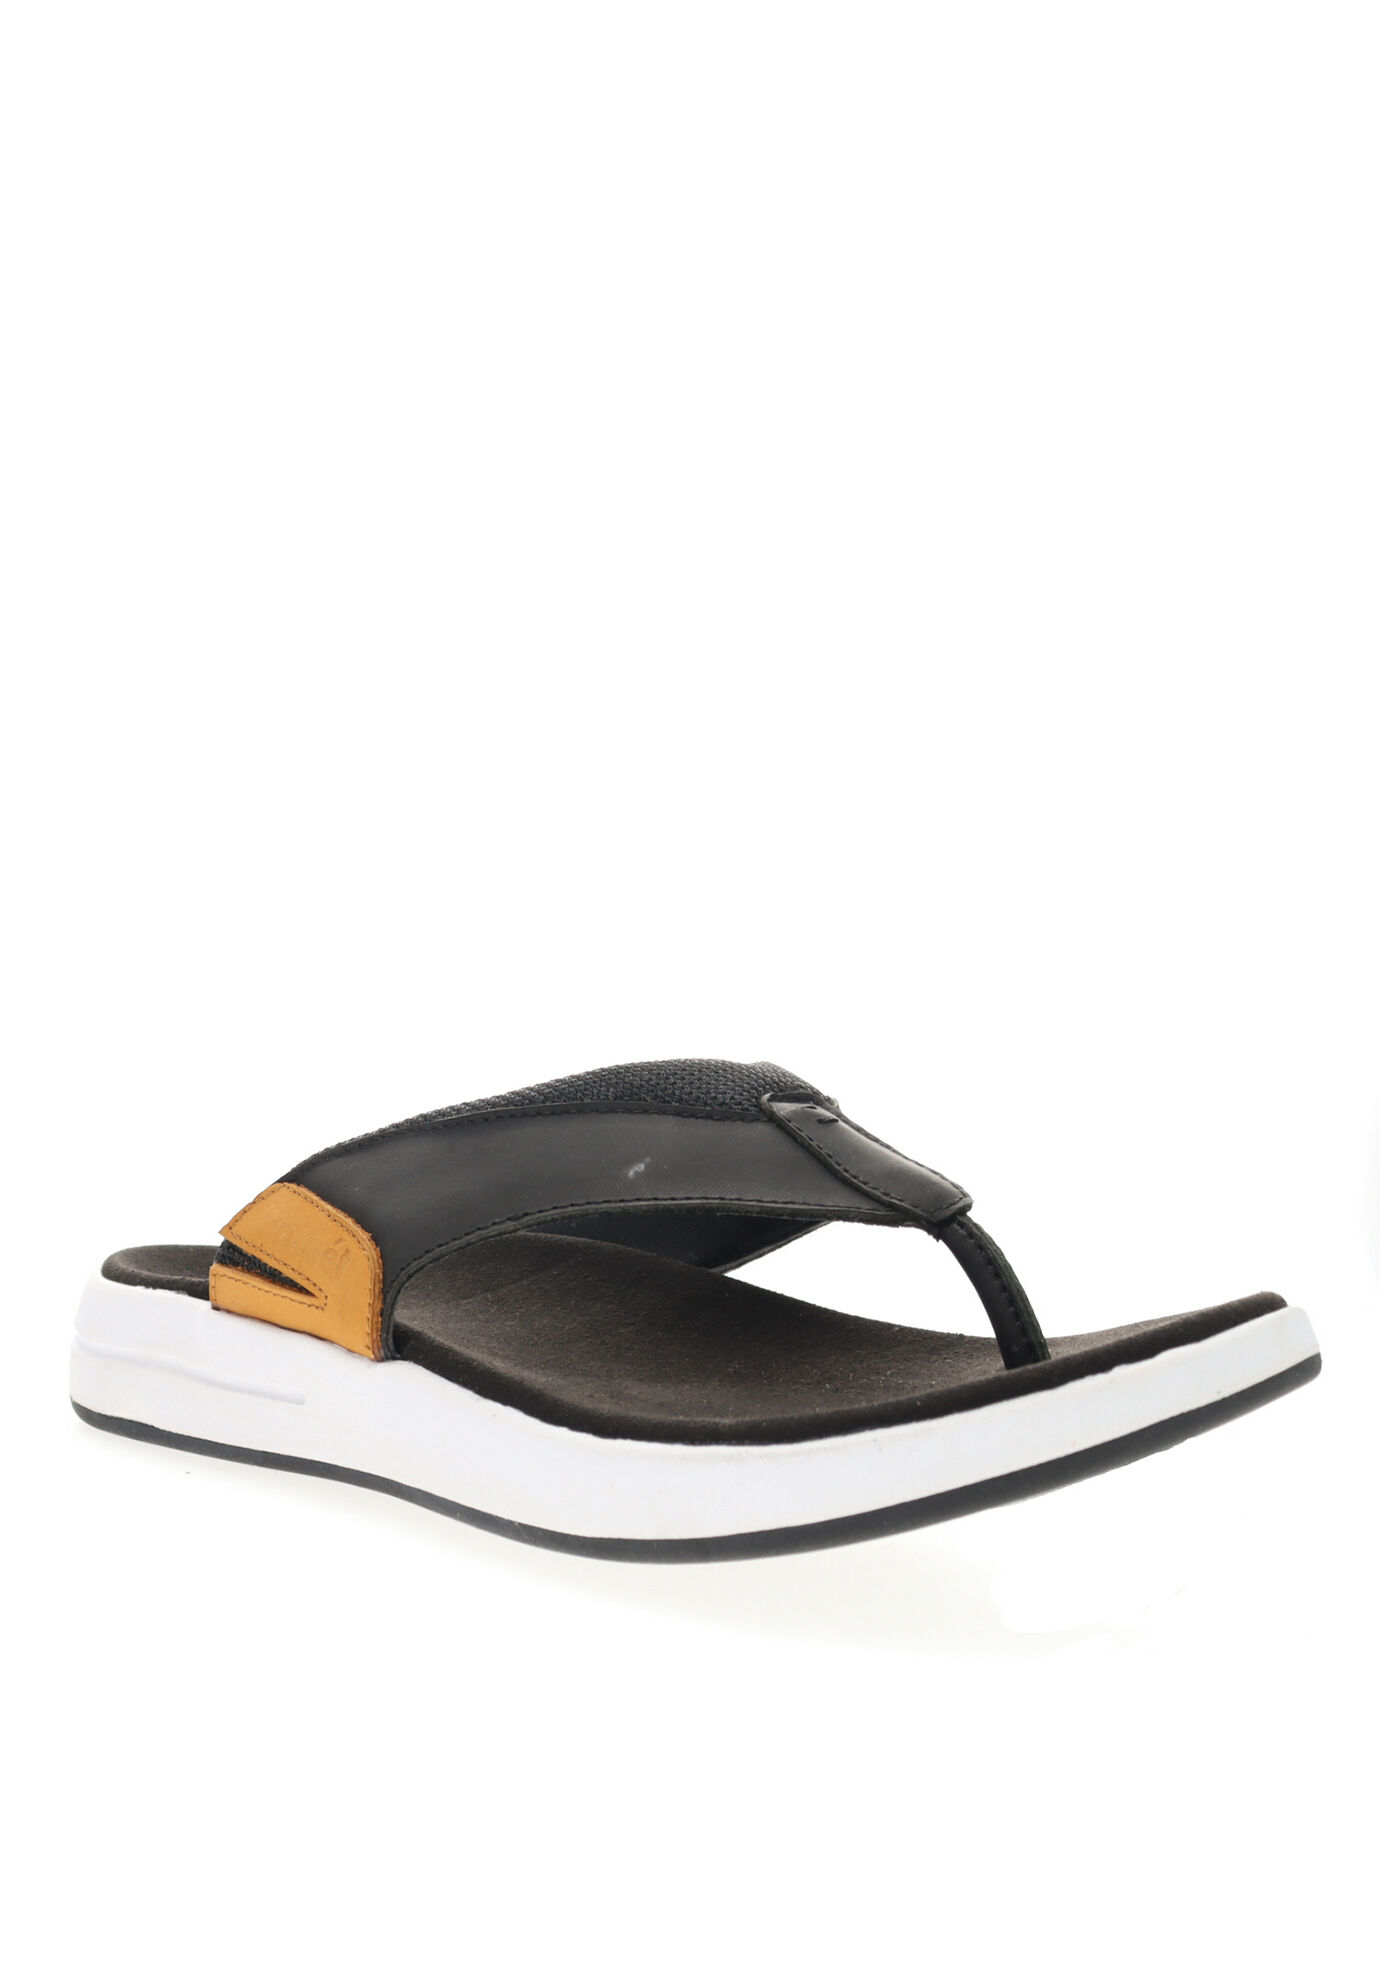 Mens Toe Post EVA Max Cushion Lightweight Sporty Active Beach Water Friendly Flip Flops Mule Sandals Size 6-12 